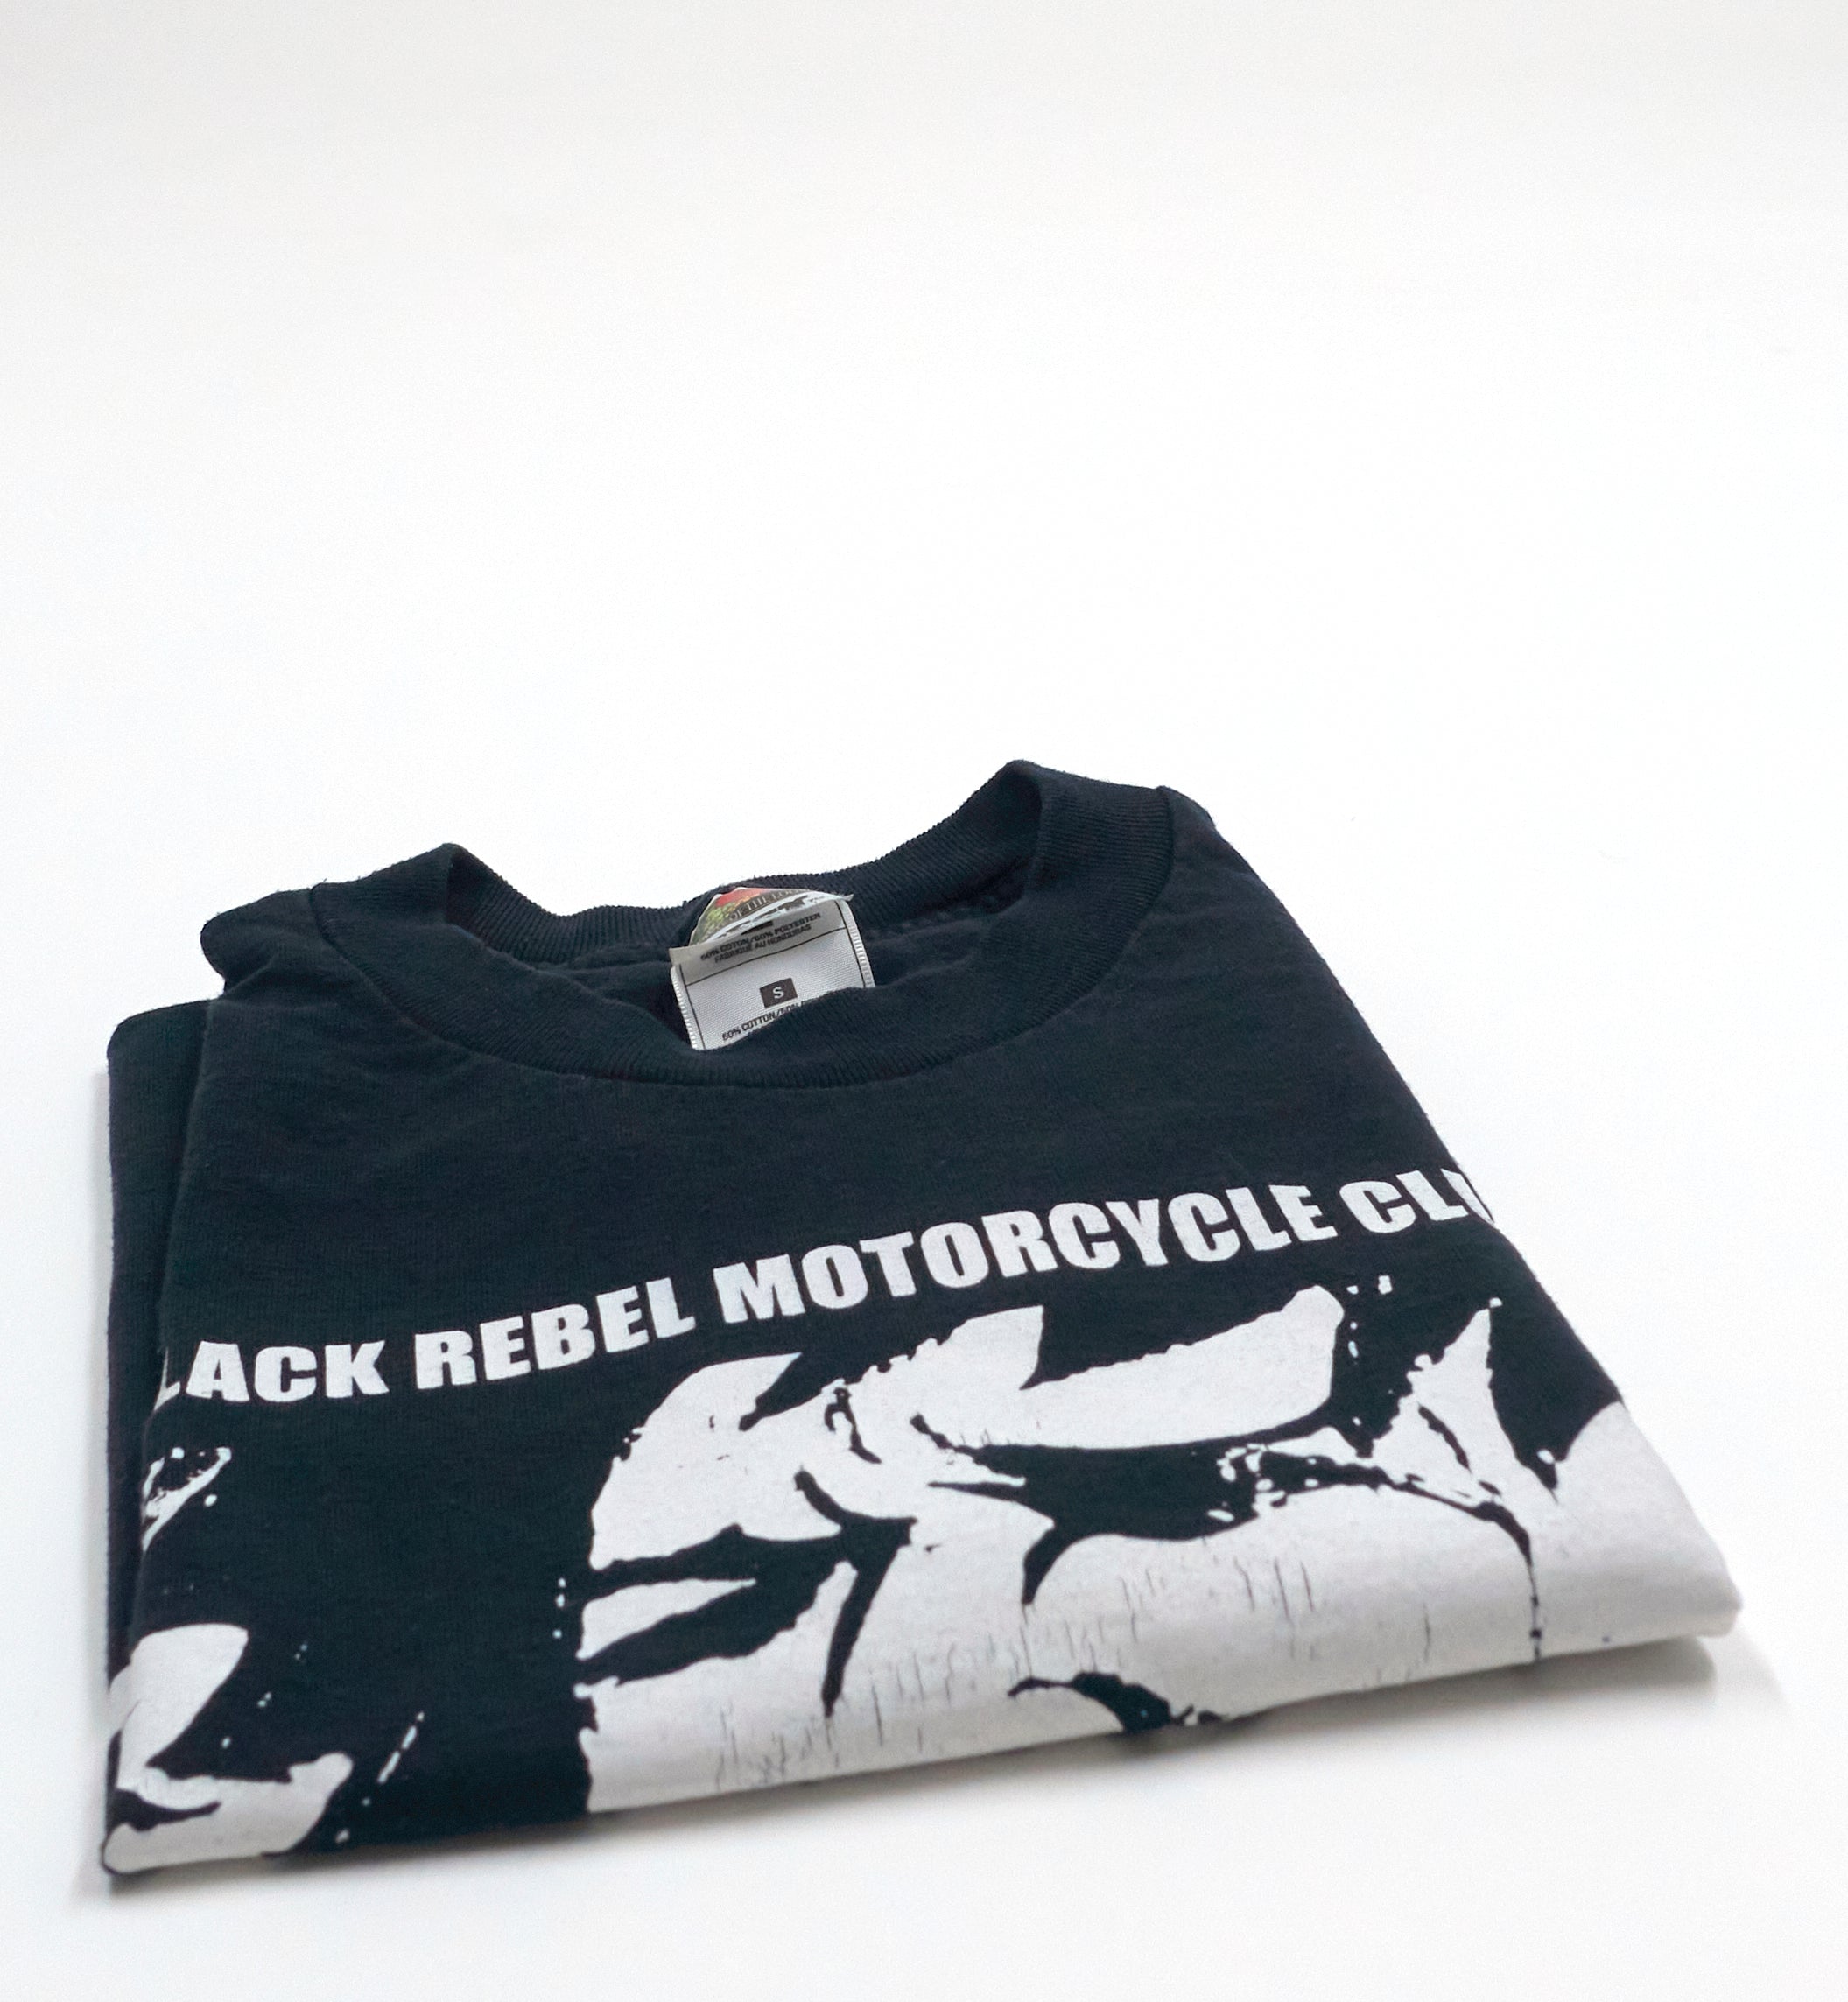 Black Rebel Motorcycle Club – BRMC 2001 Tour Shirt Size Small